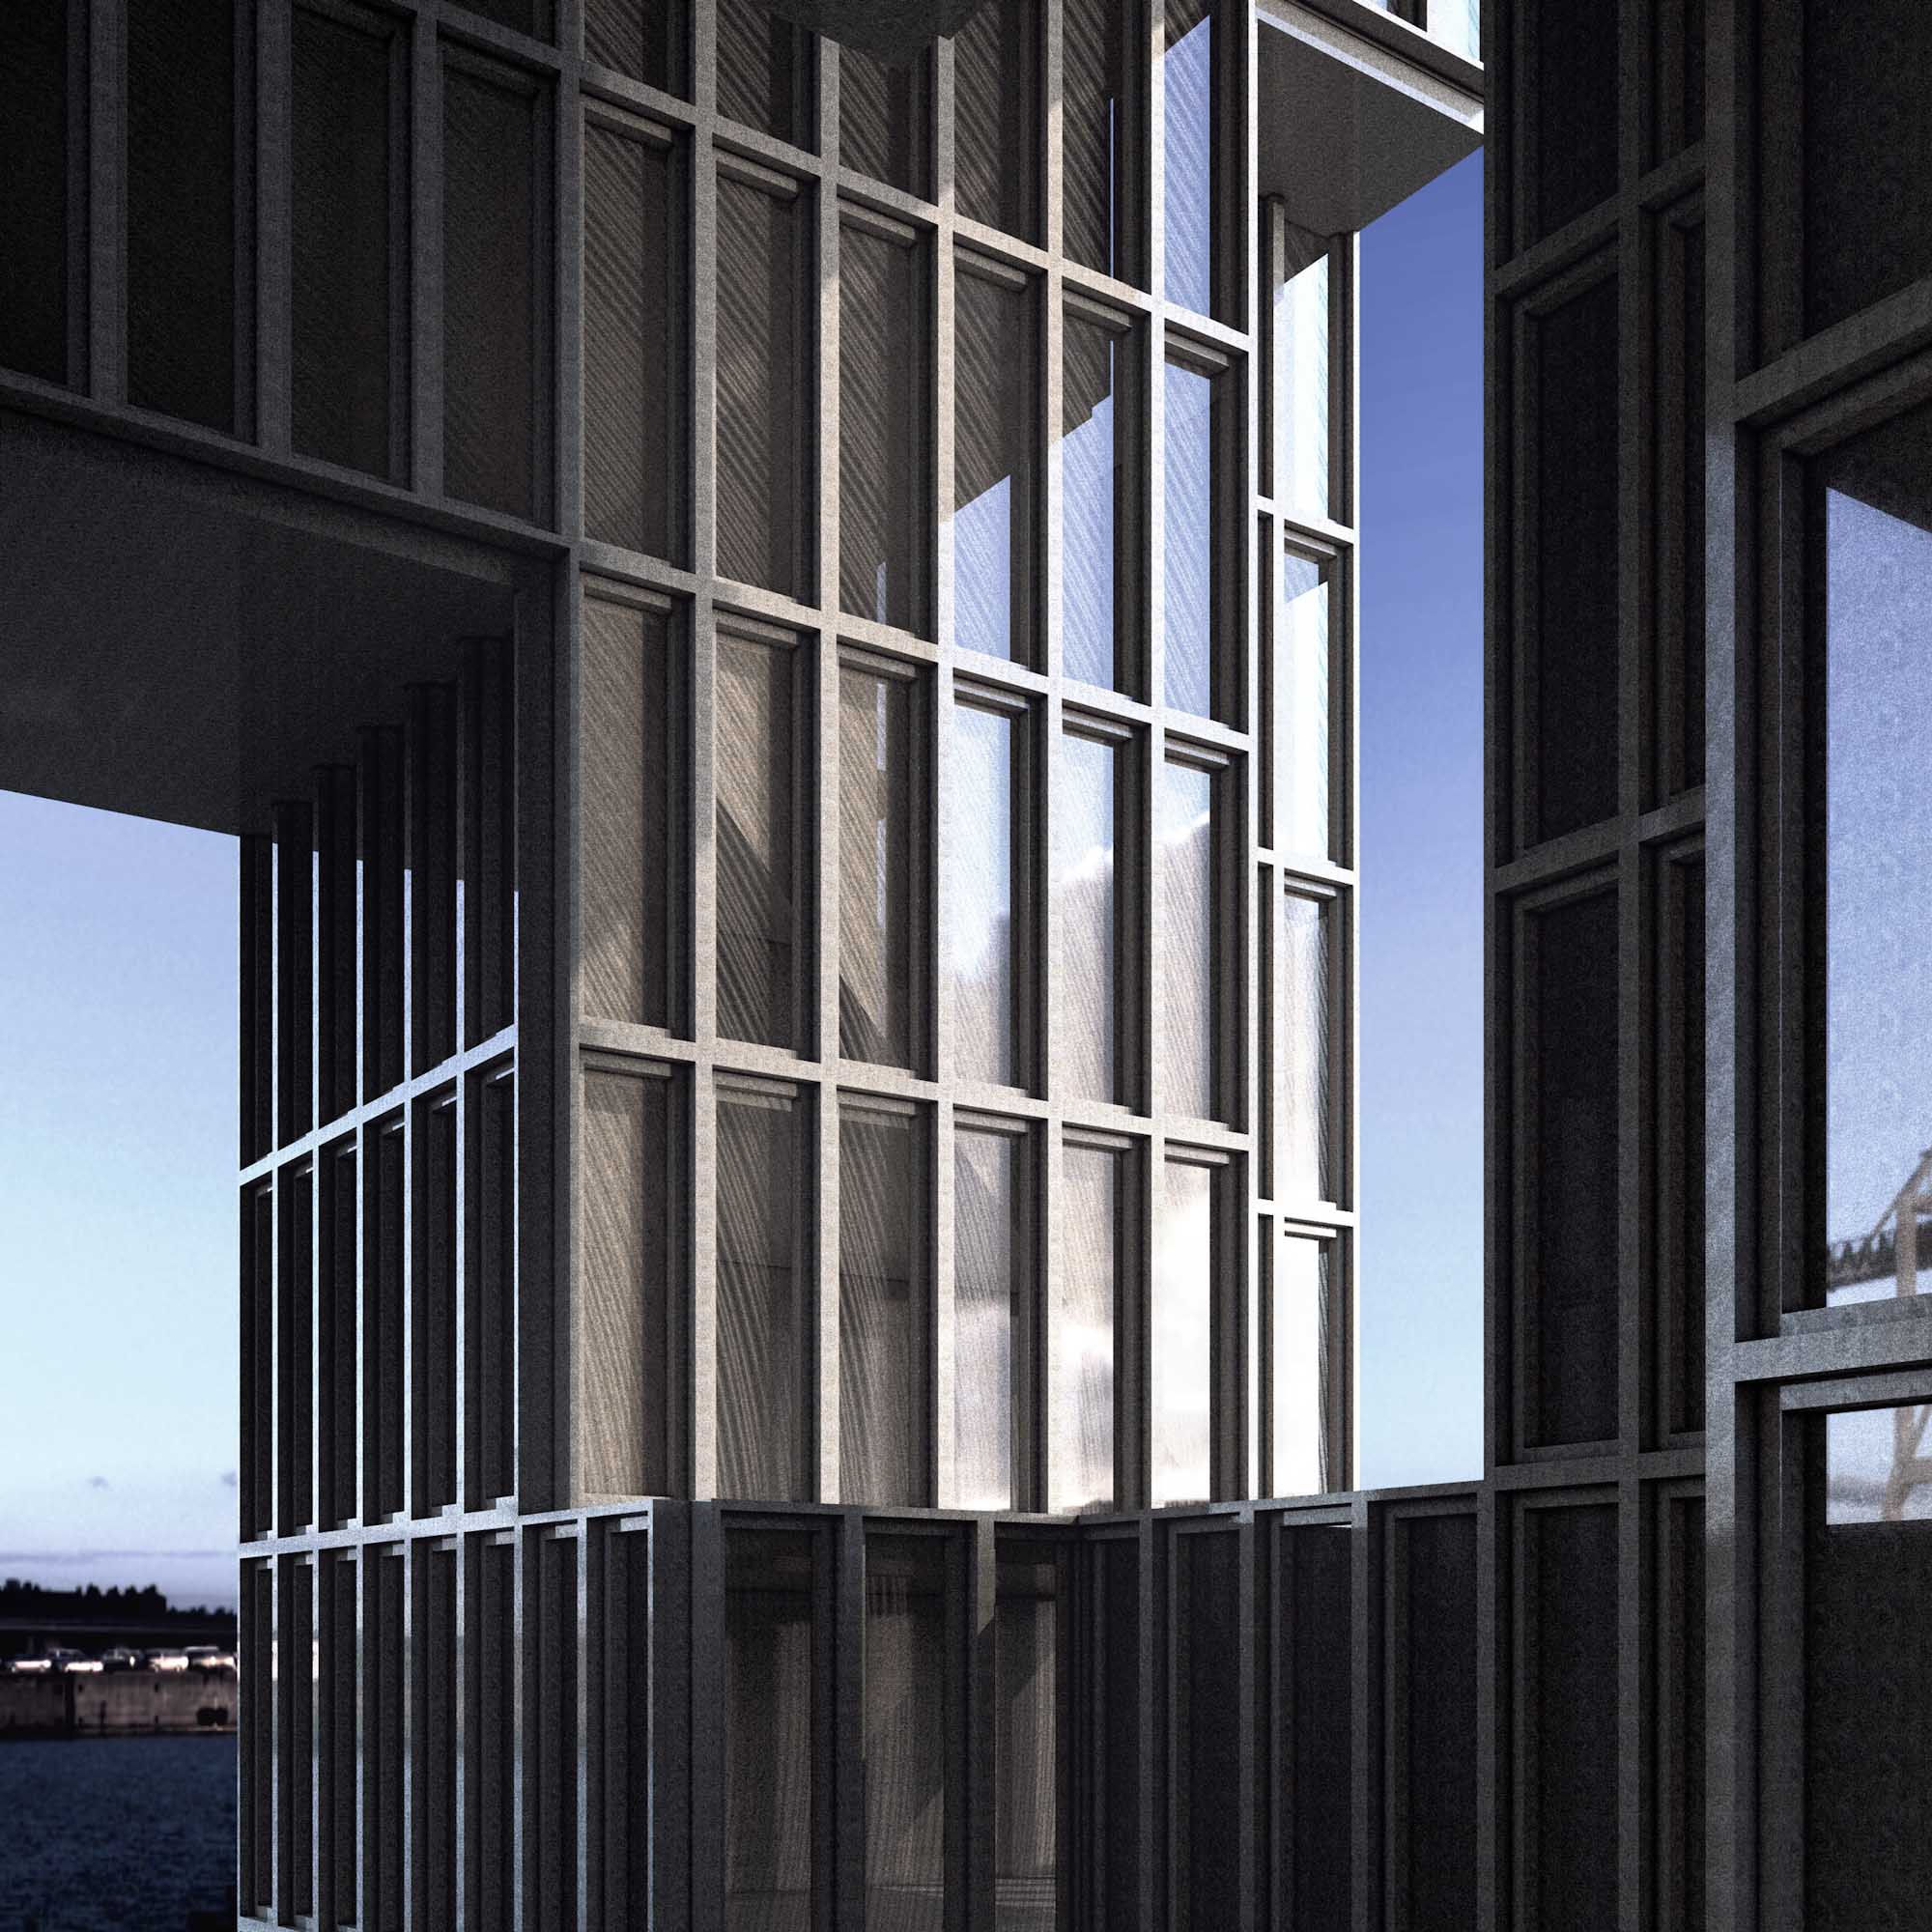 External rendering - continuous metal facade